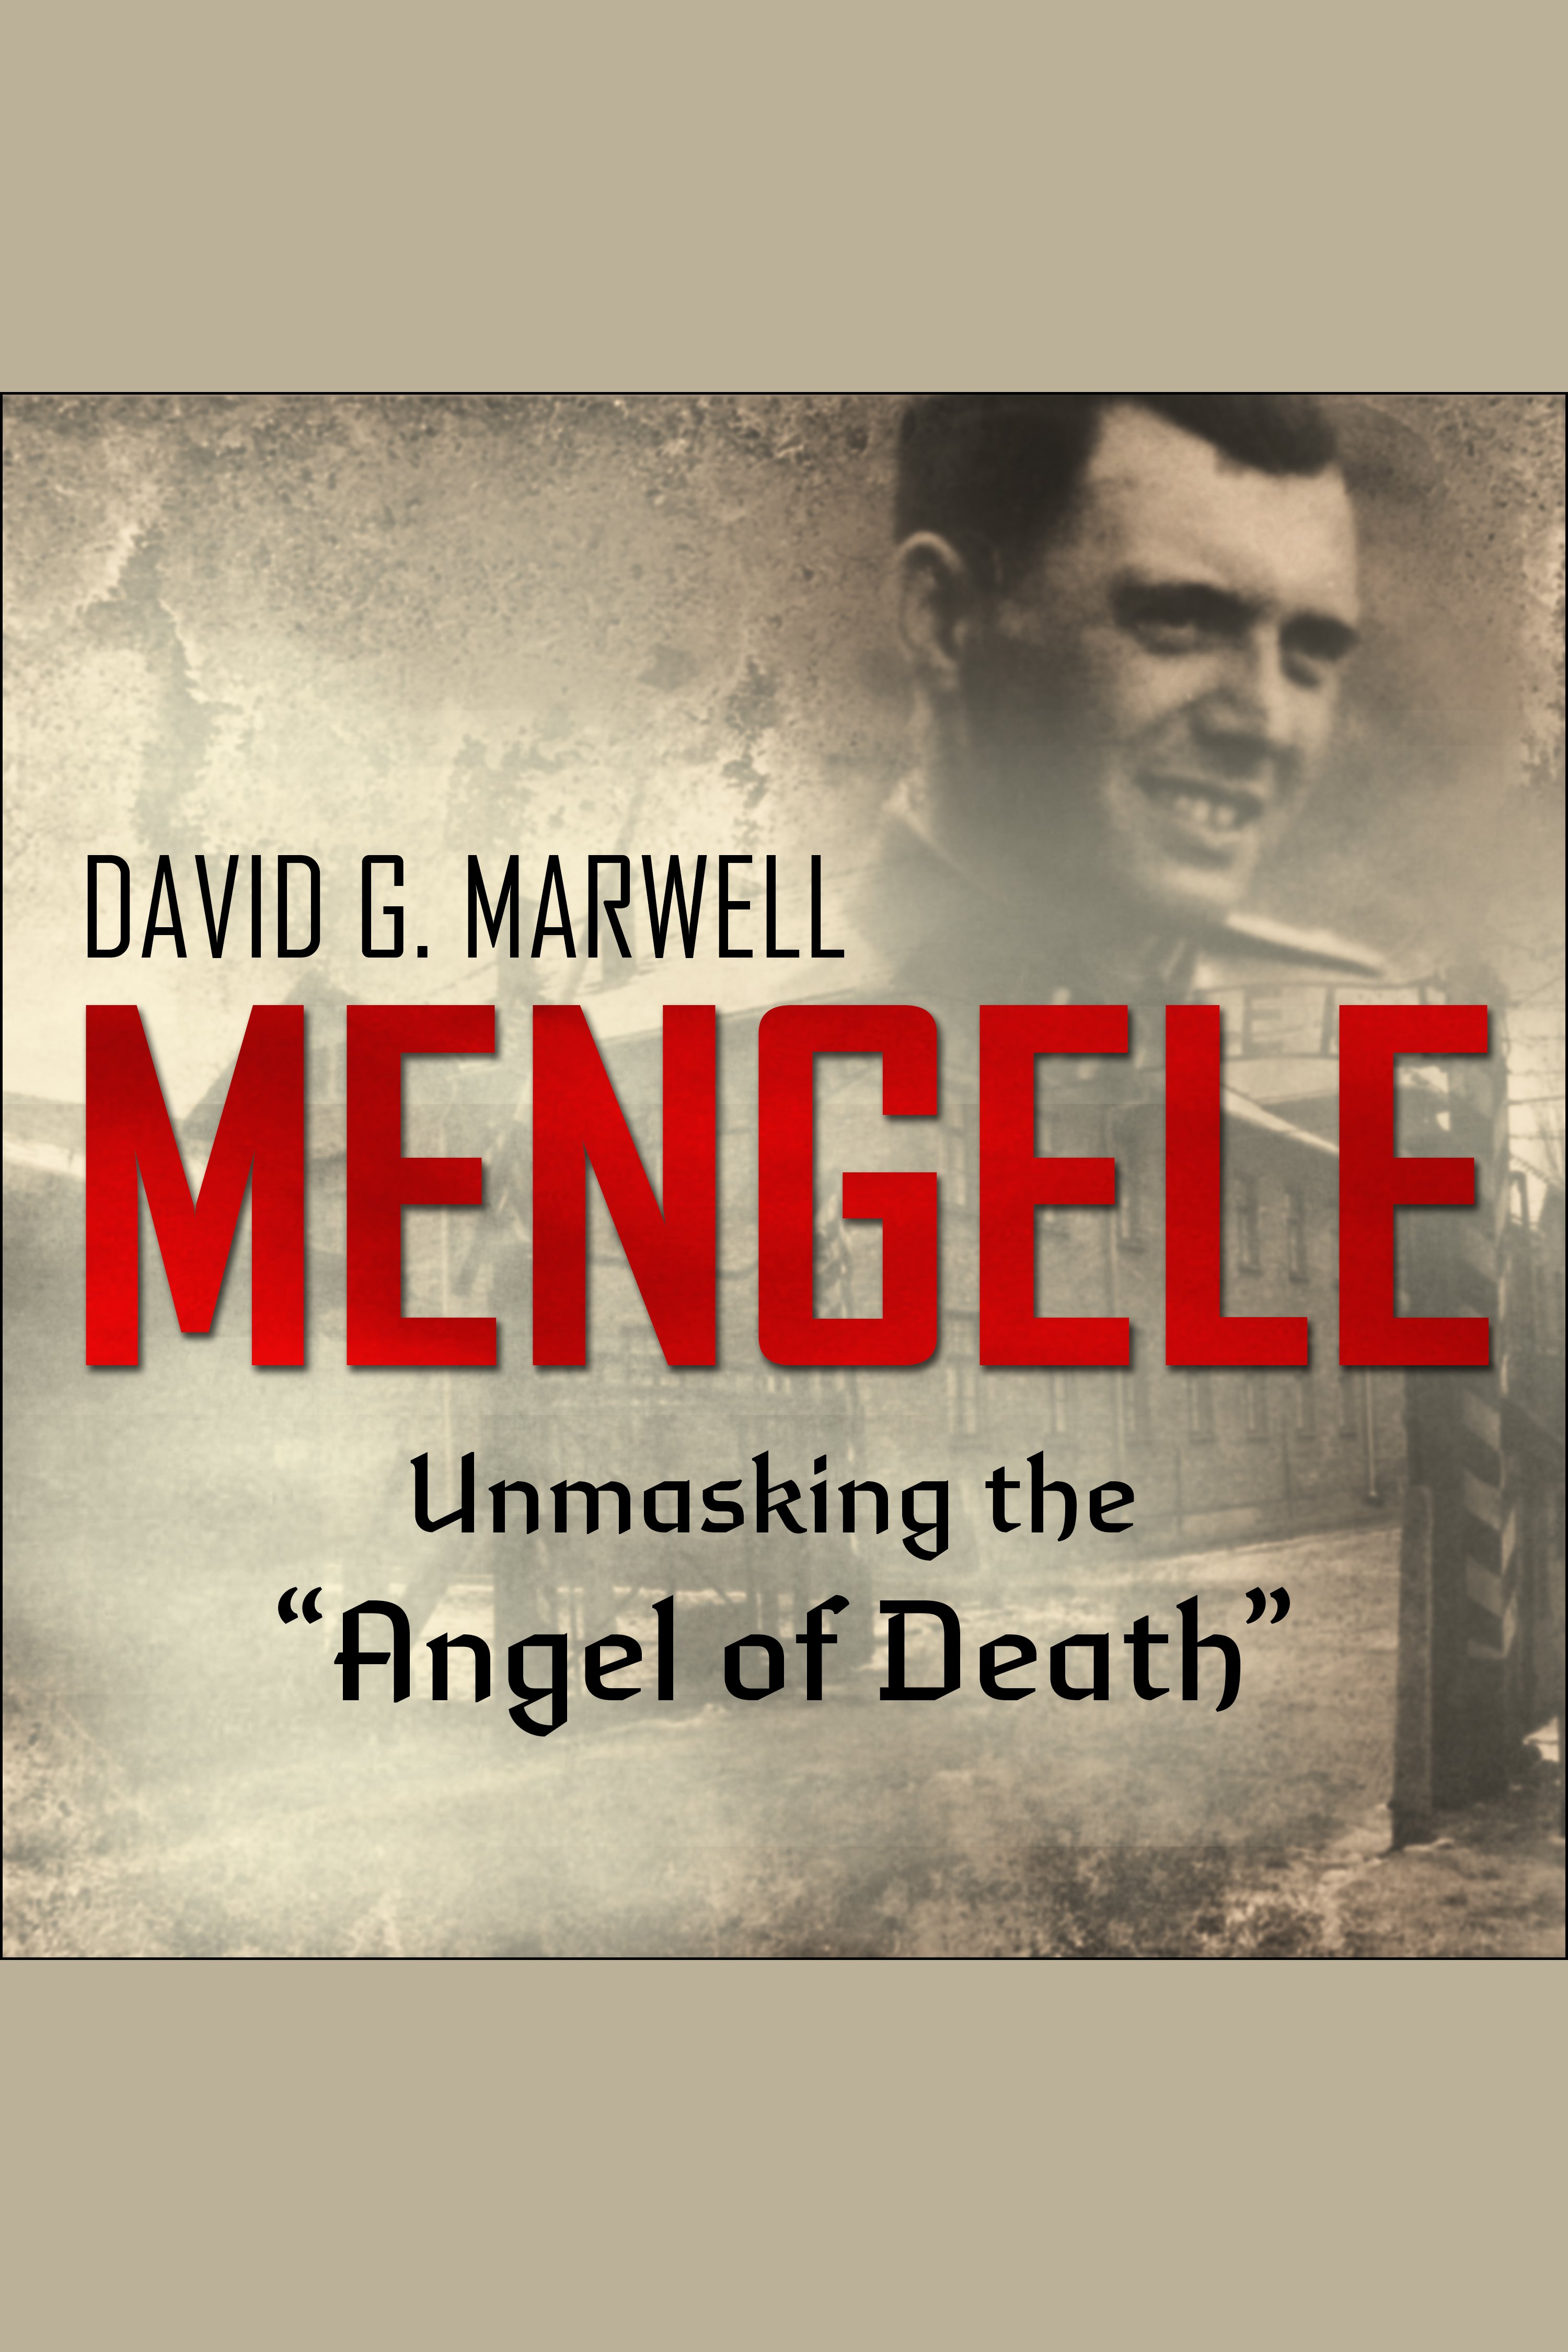 Mengele unmasking the "Angel of Death" cover image